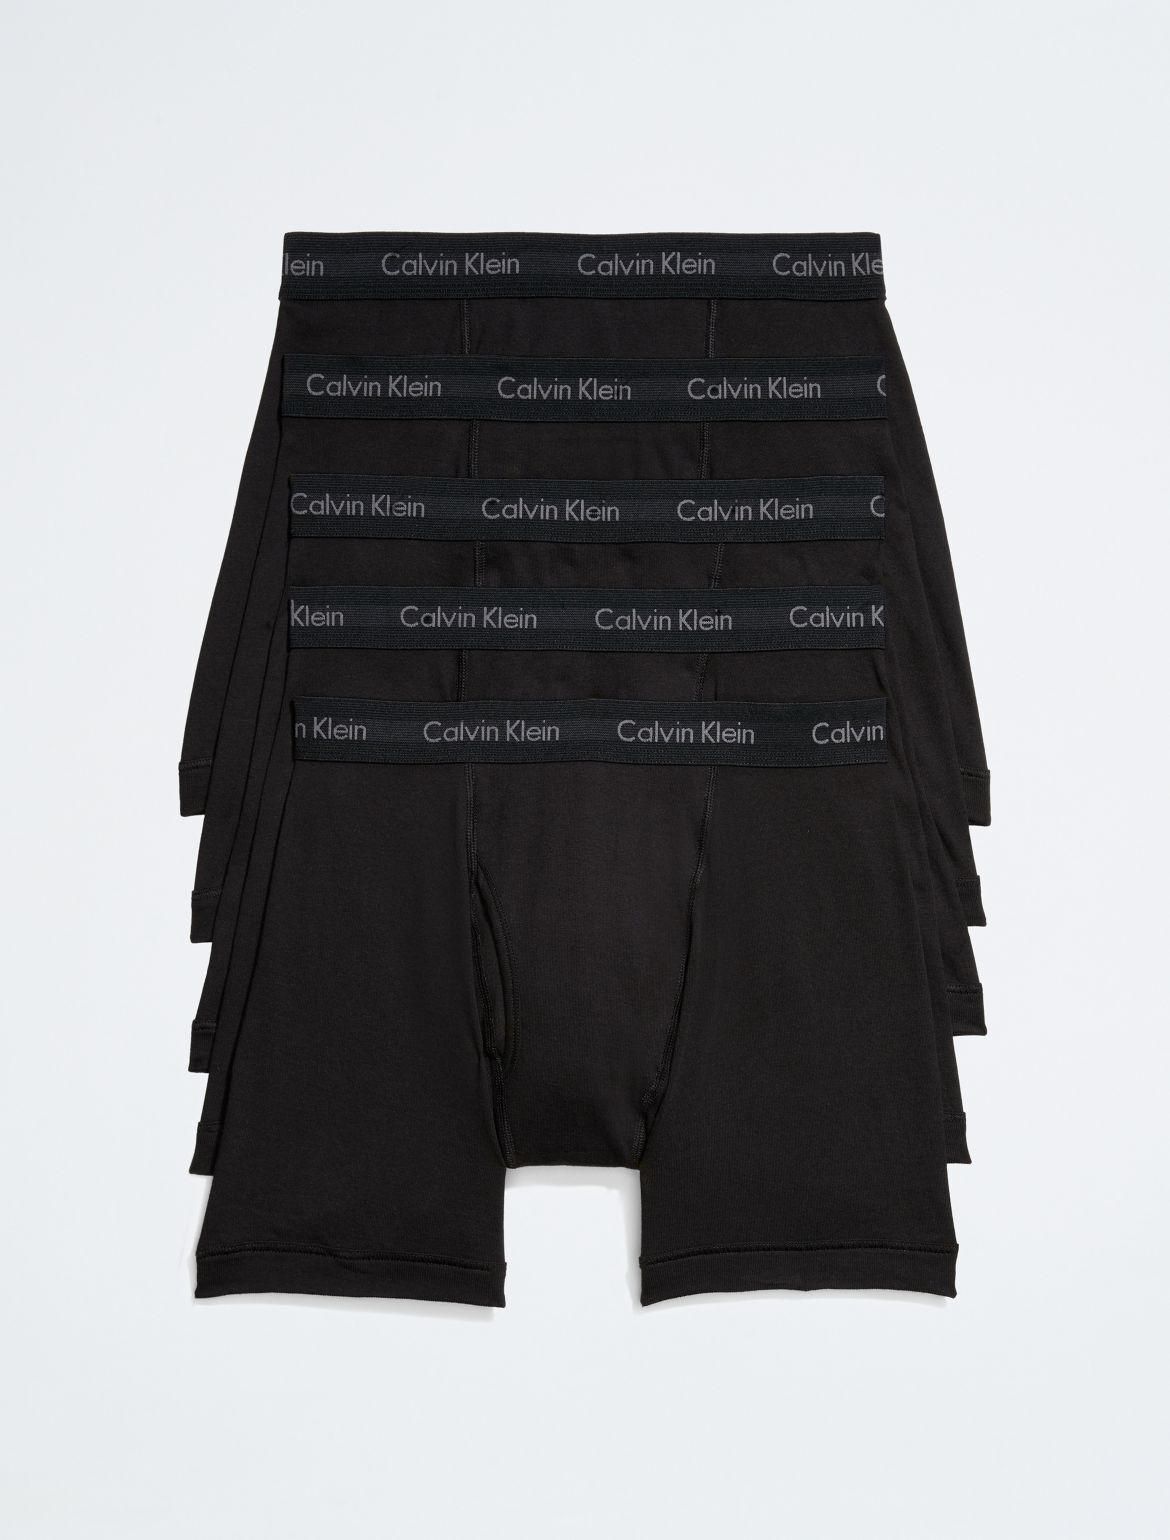 Calvin Klein Men's Cotton Classics 5-Pack Boxer Brief - Black - S